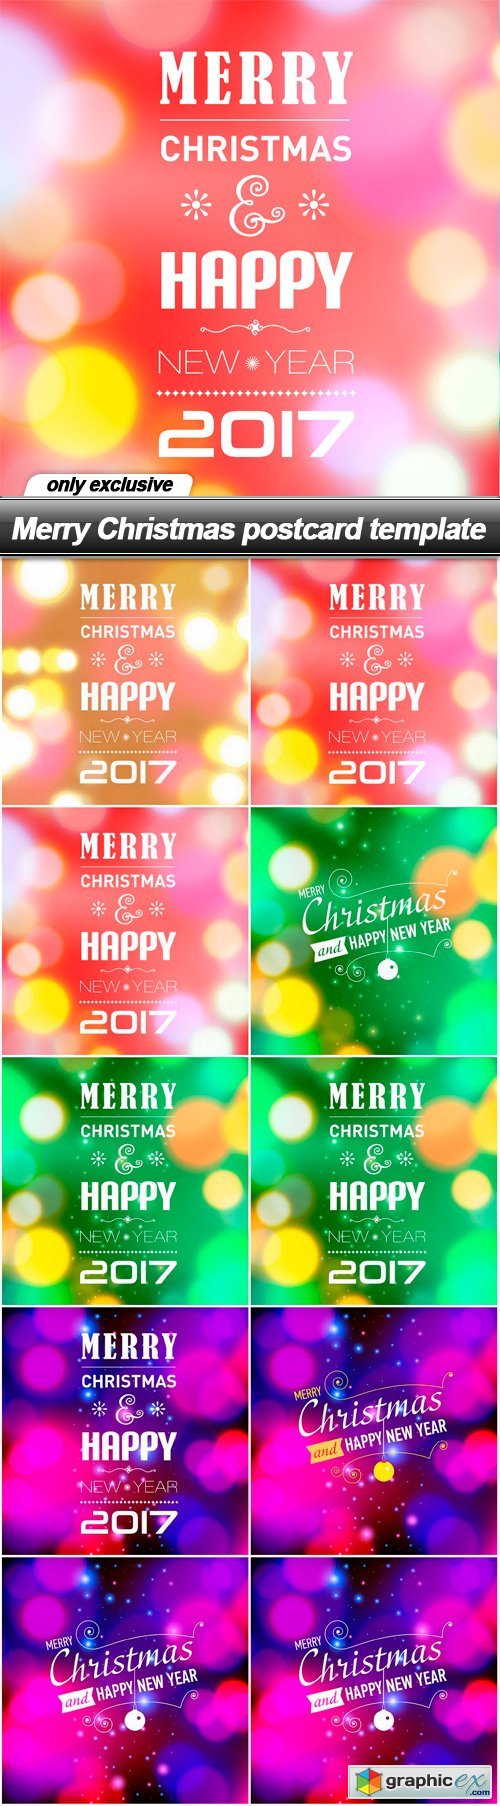 Merry Christmas postcard template - 10 EPS